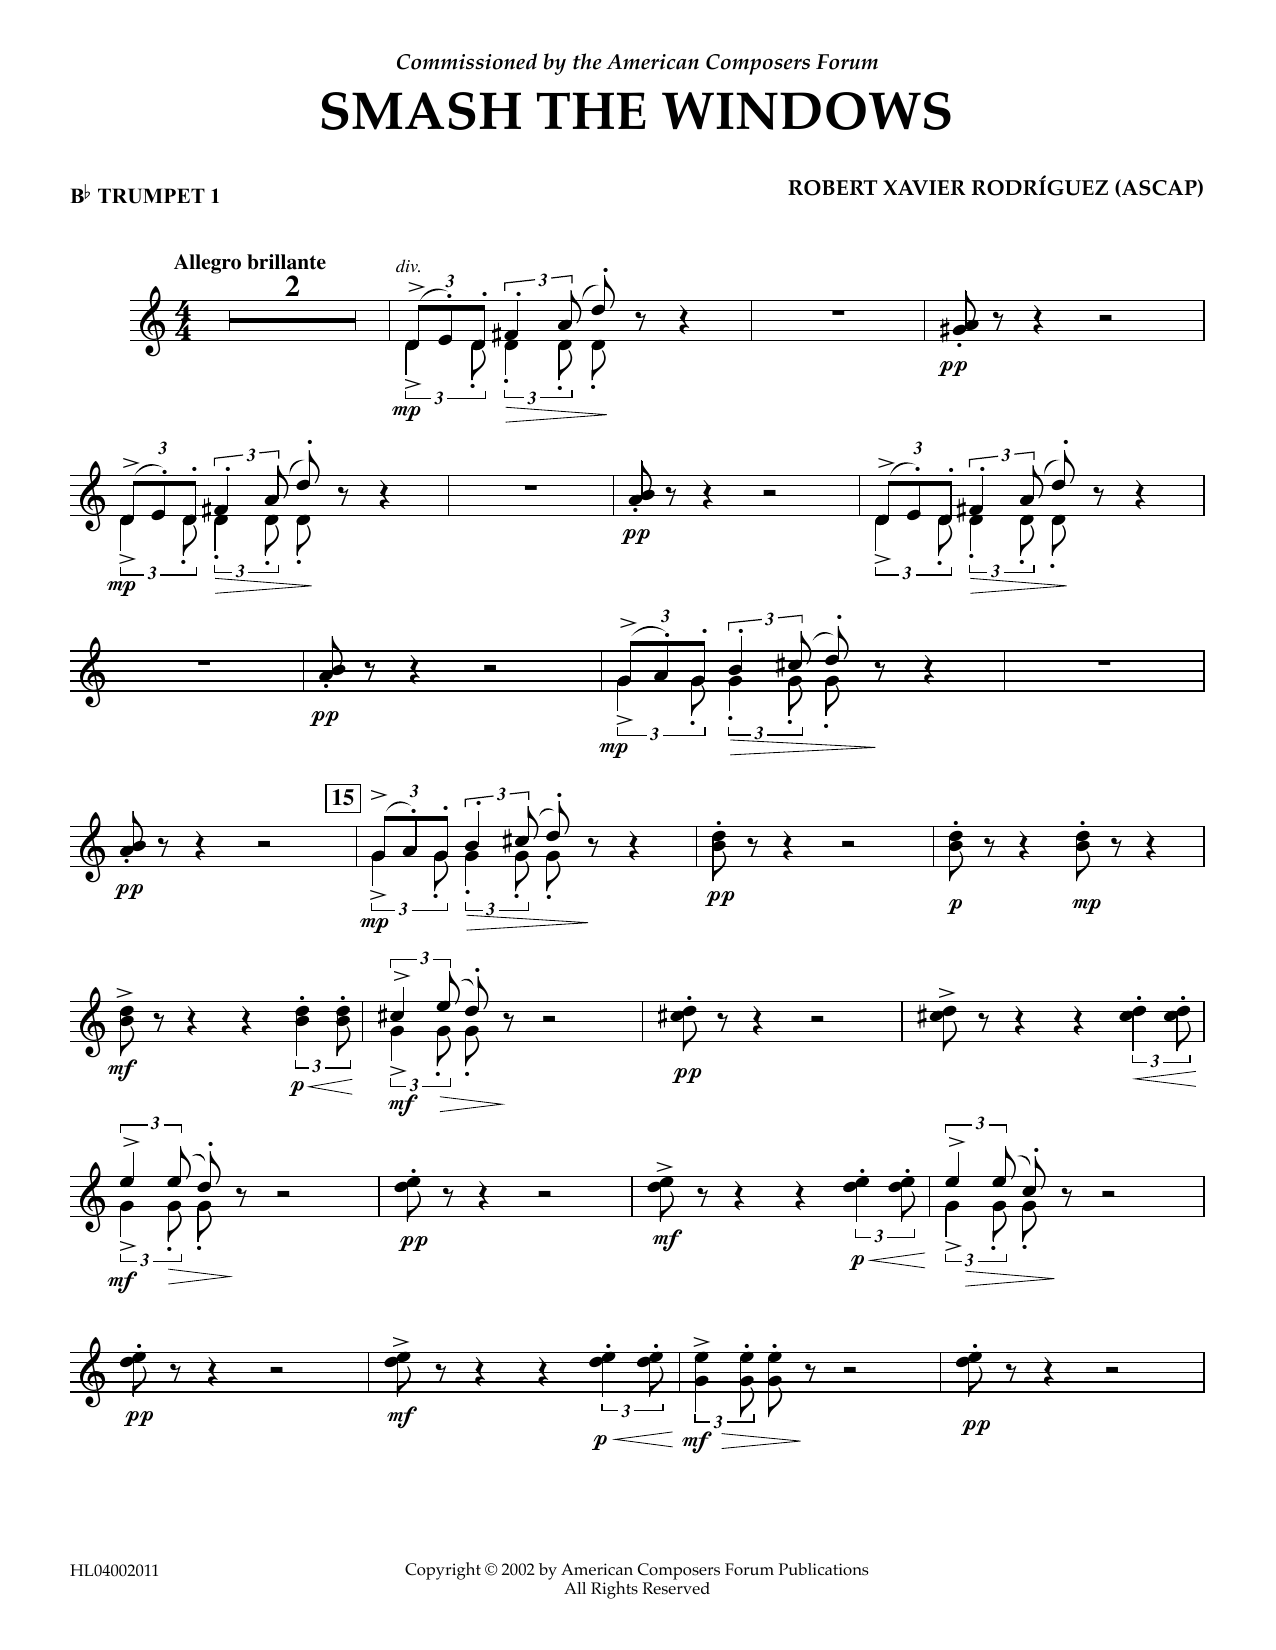 Download Robert Xavier Rodríguez Smash the Windows - Bb Trumpet 1 Sheet Music